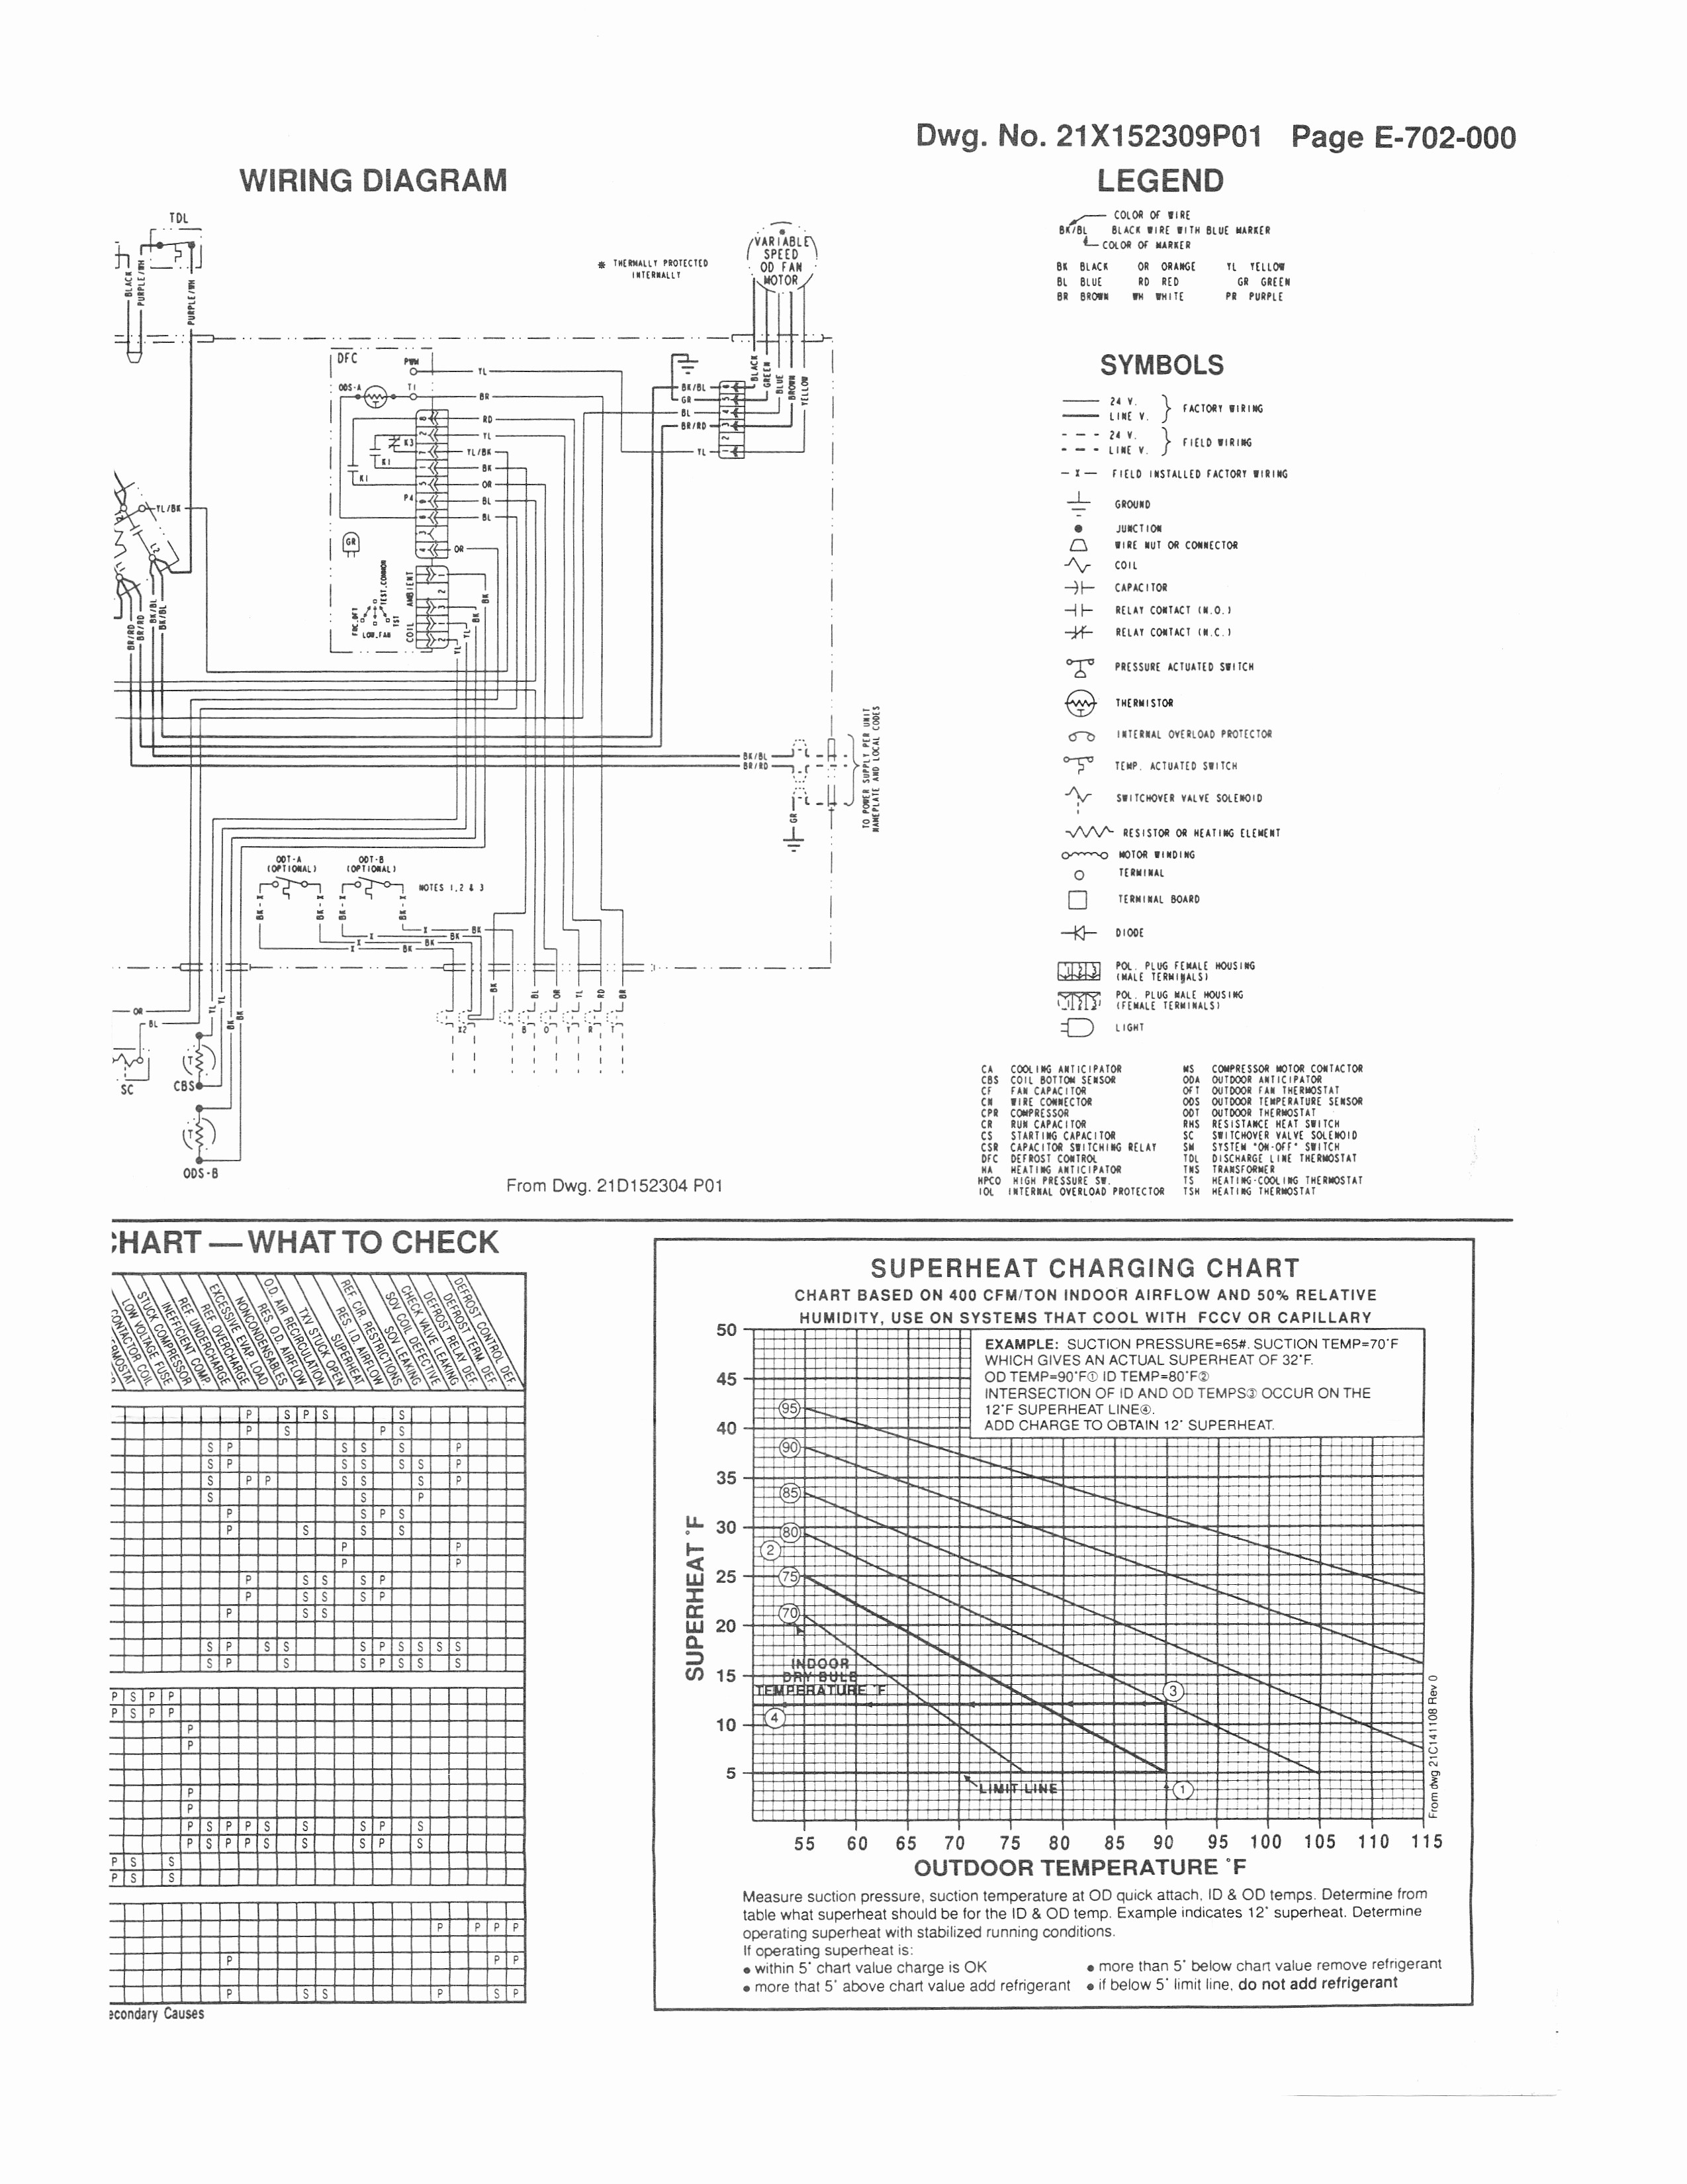 Trane Xl1200 Heat Pump Wiring Diagram Wiring Diagram Trane Xl1200 Heat Pump Wiring Diagram Elegant Trane Of Trane Xl1200 Heat Pump Wiring Diagram